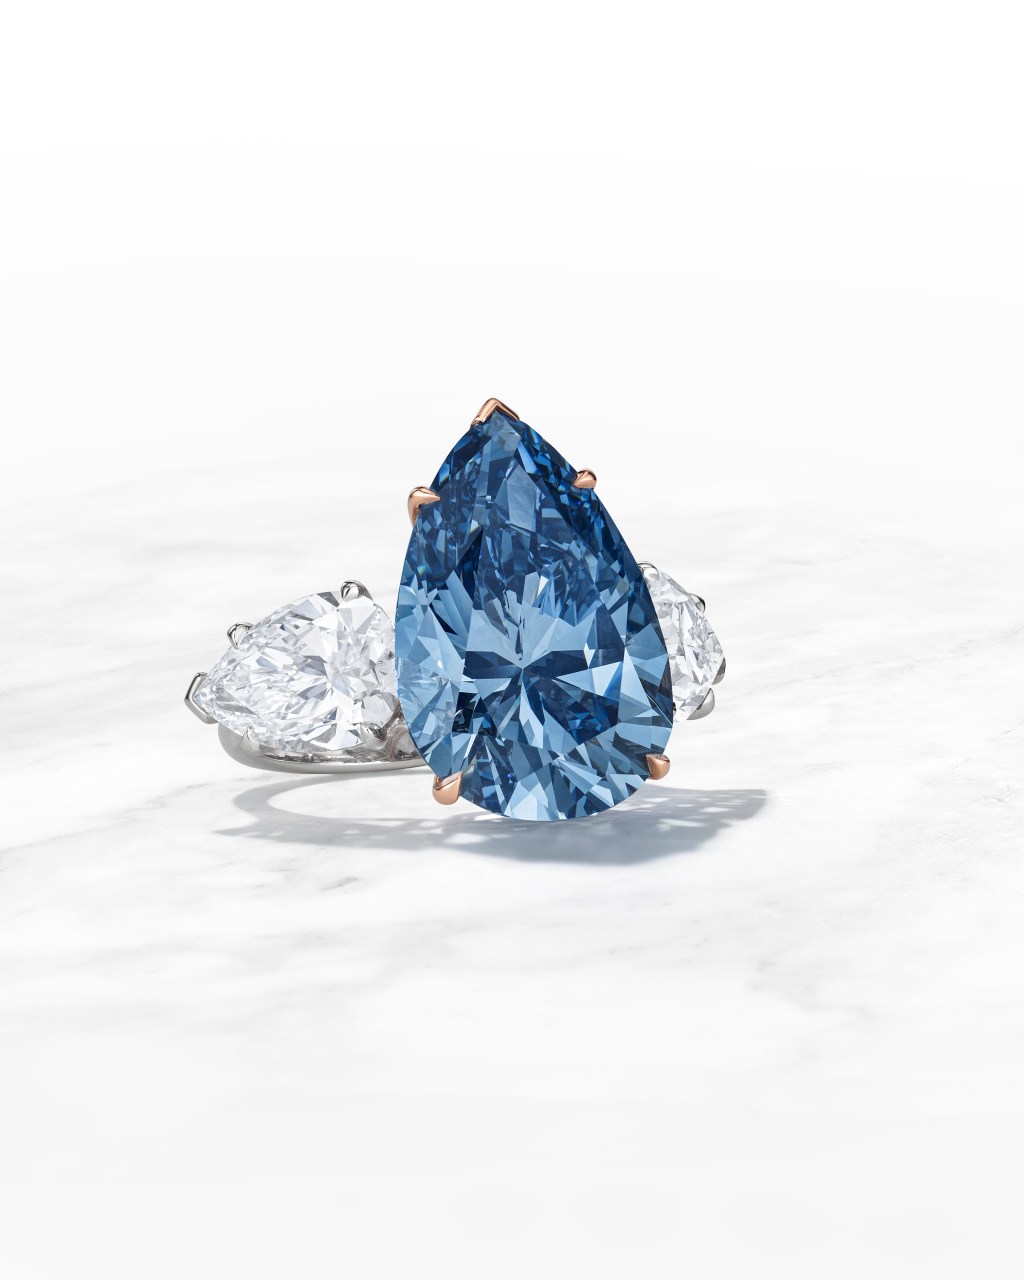 largest-yet-flawless-fancy-vivid-blue-diamond-sells-for-$44-million-in geneva